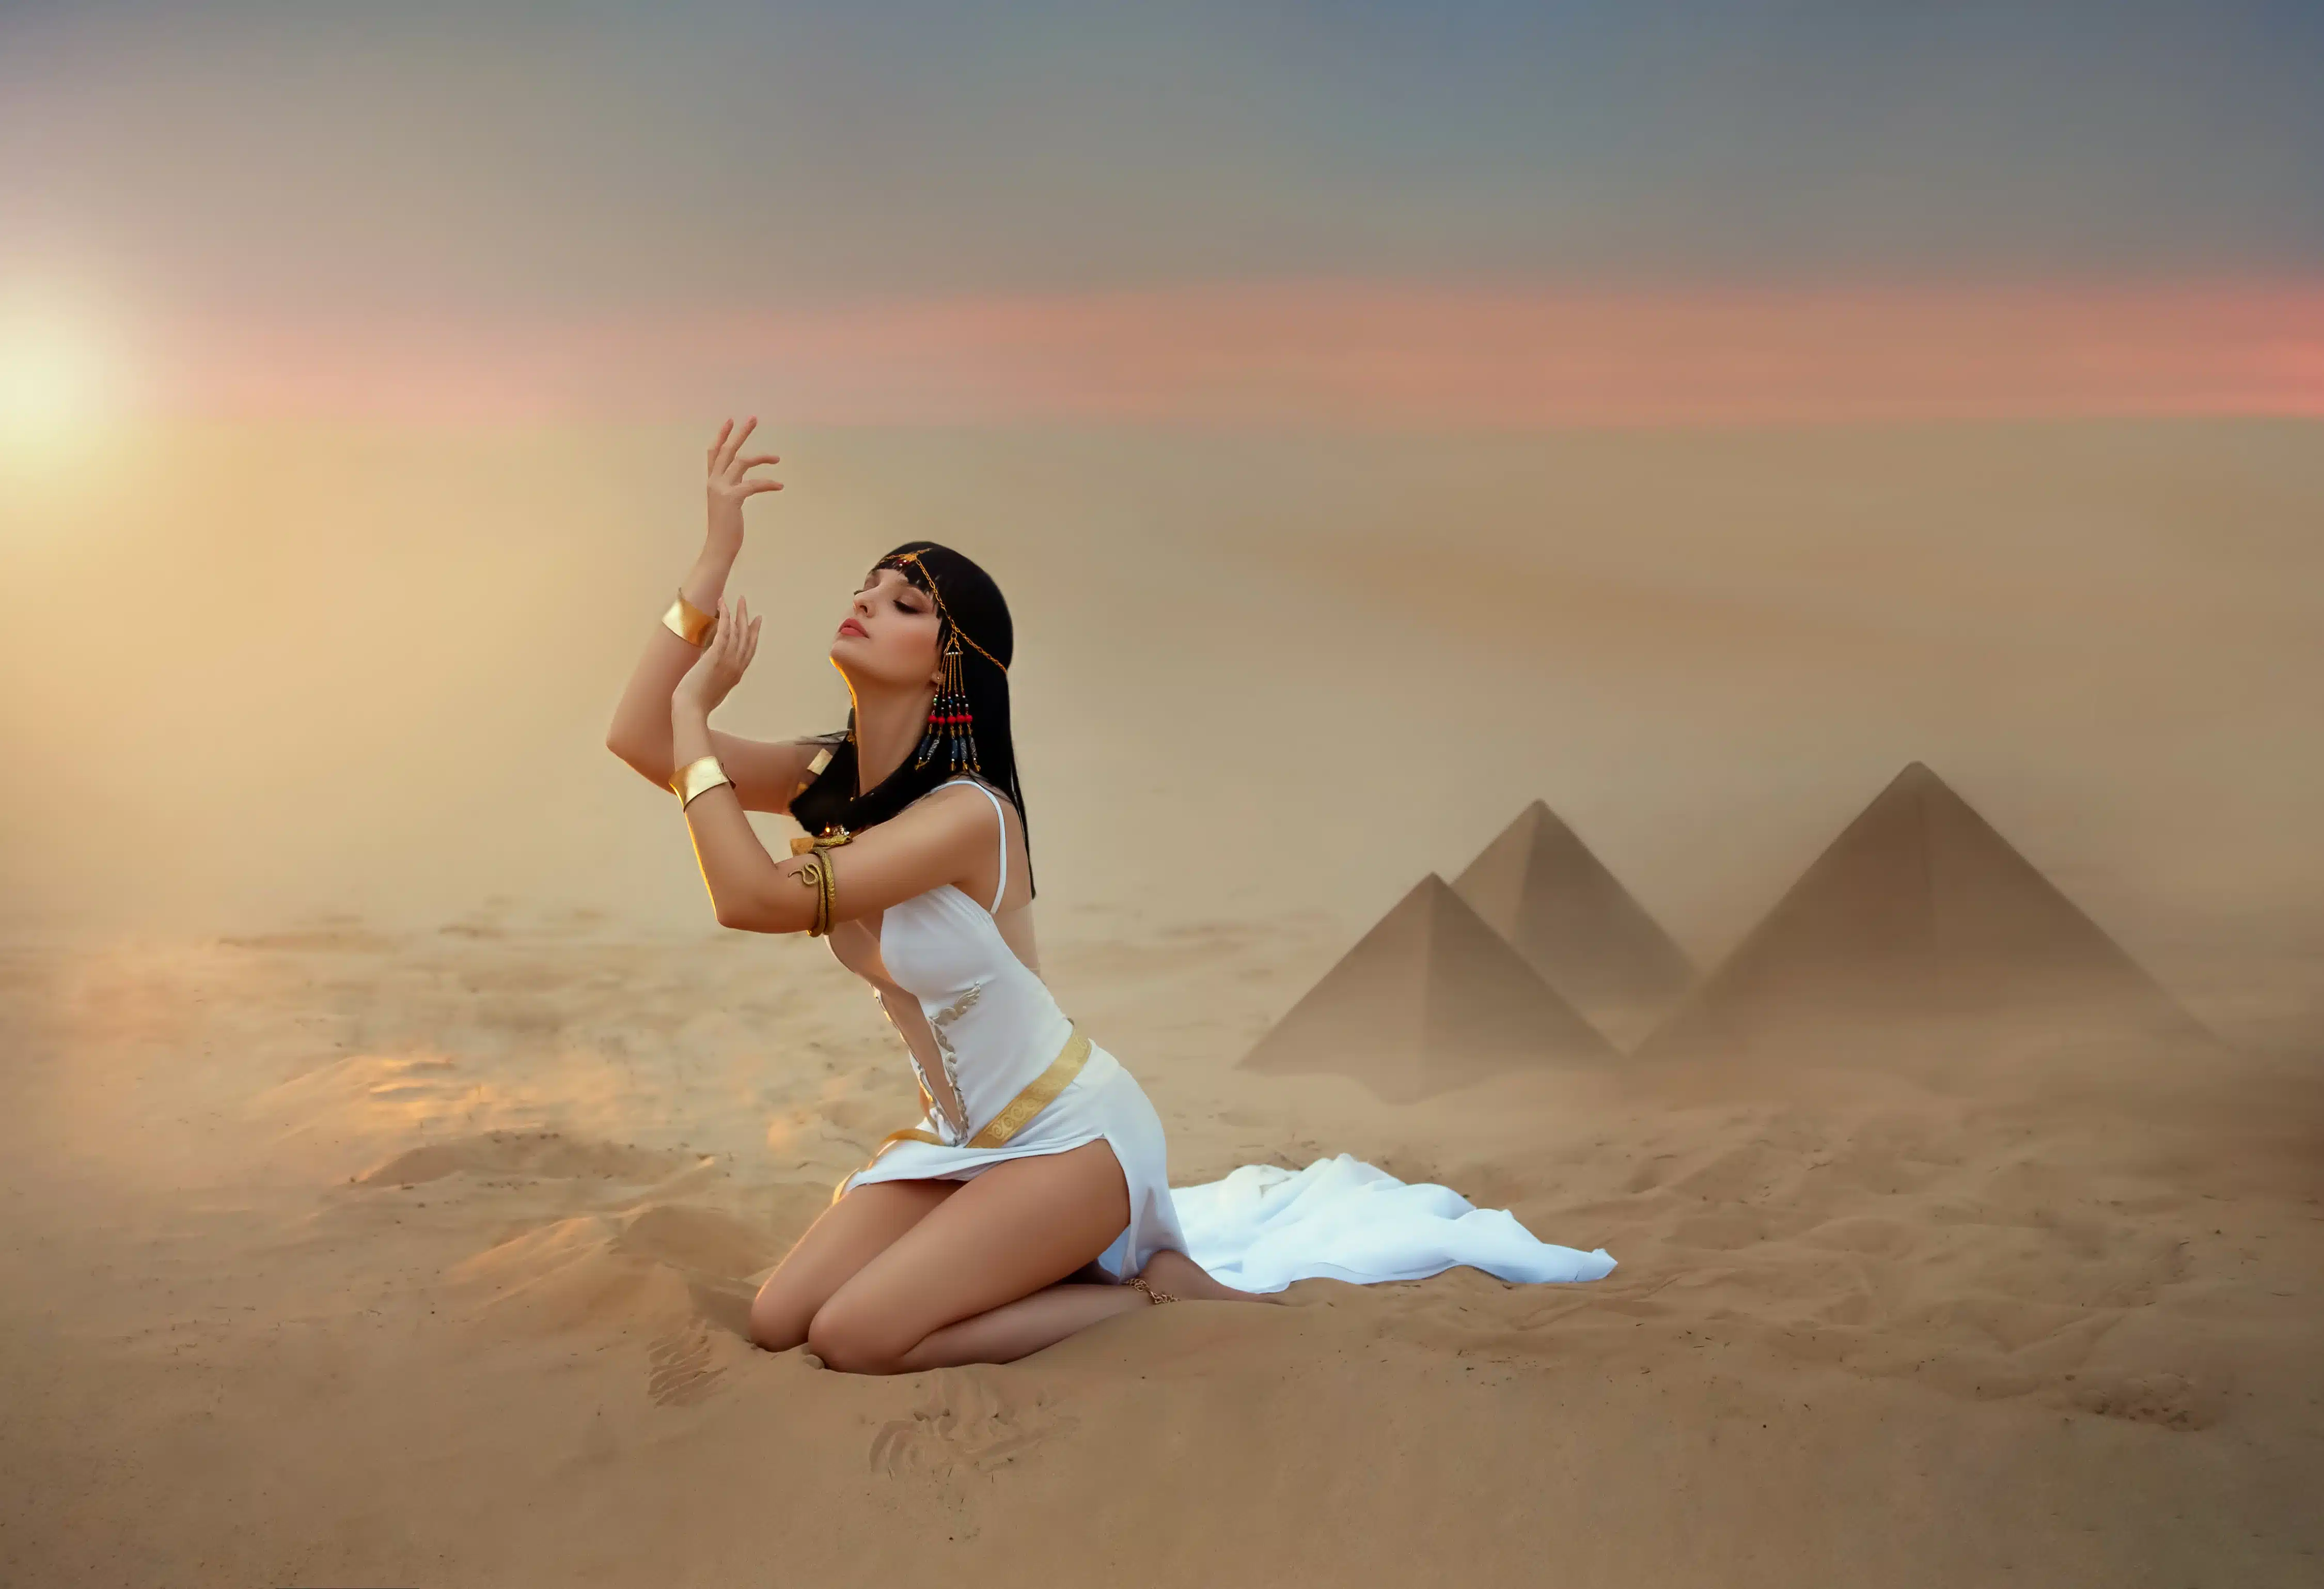 egyptian woman sits on sand desert praying to the sky